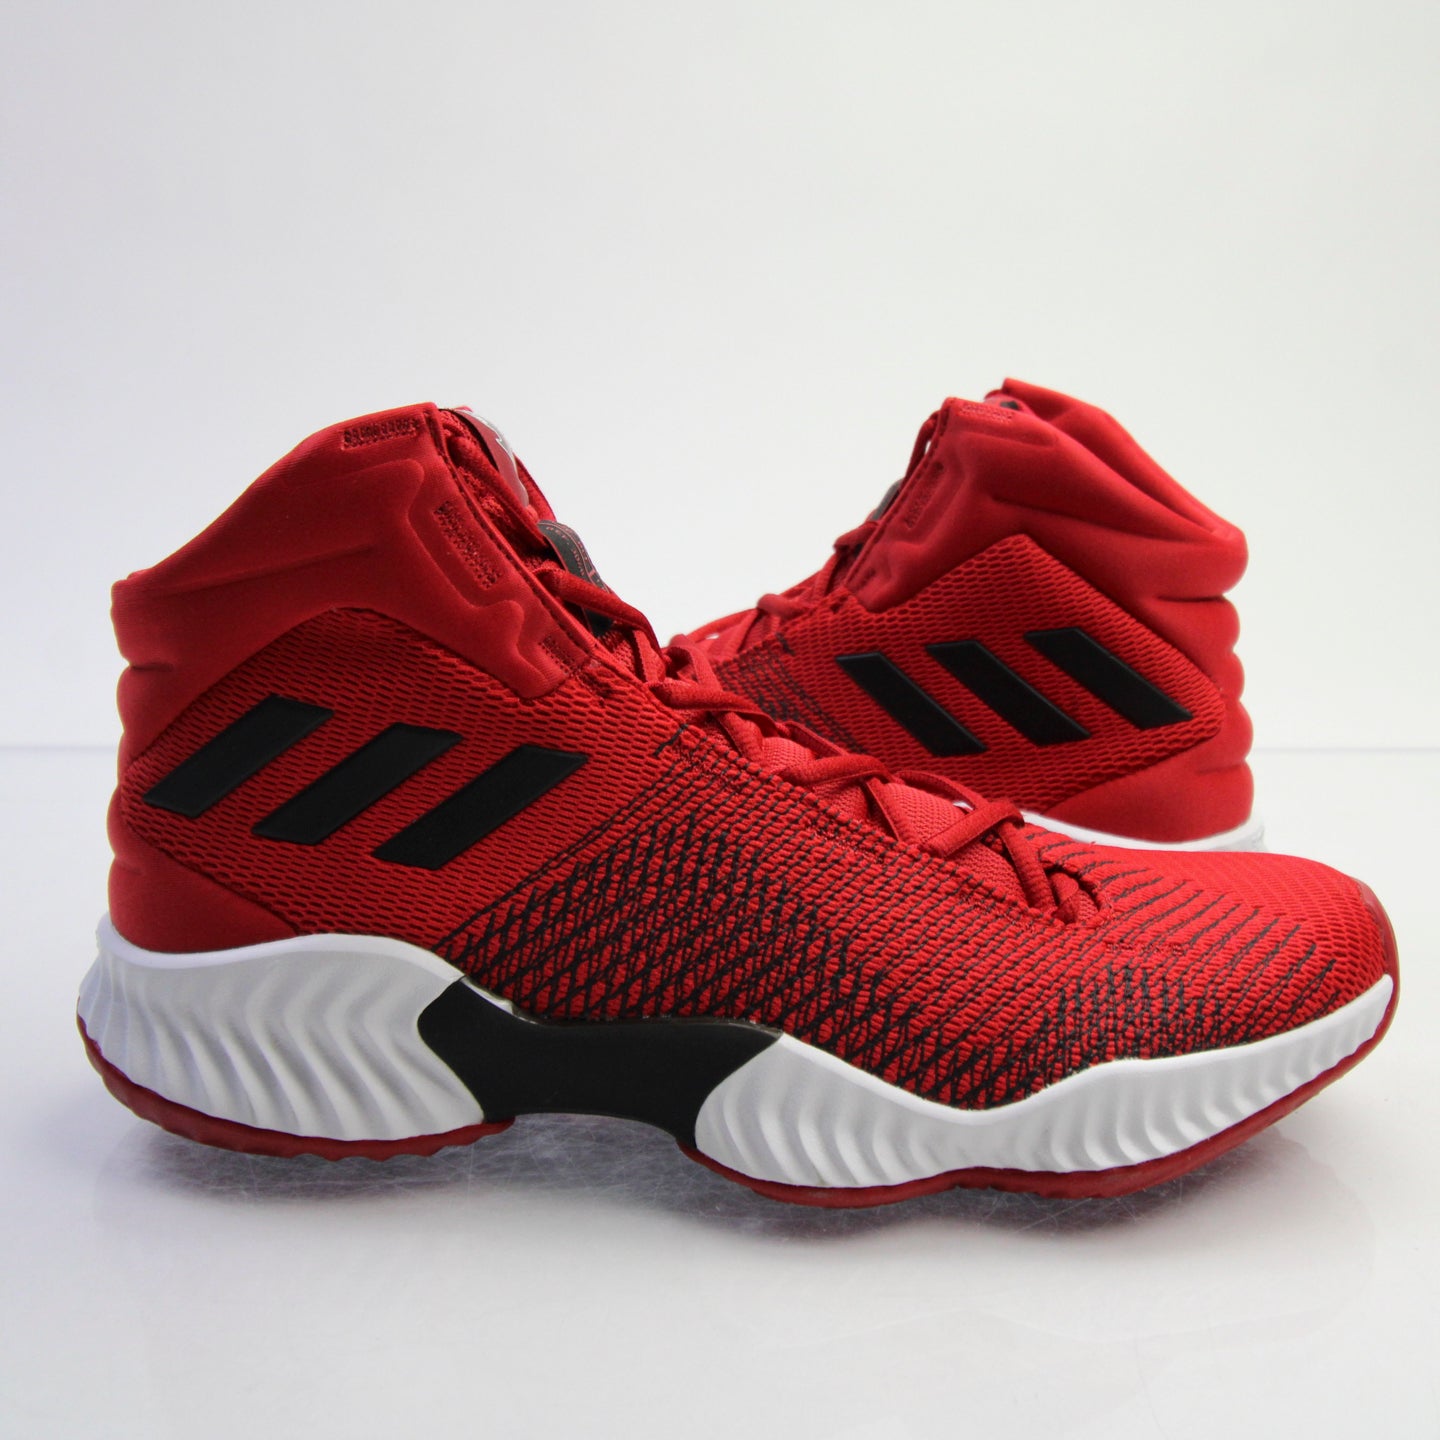 Buy adidas Men's OwnTheGame Basketball Shoe, Black/Black/Black, 6.5 Medium  US at Amazon.in